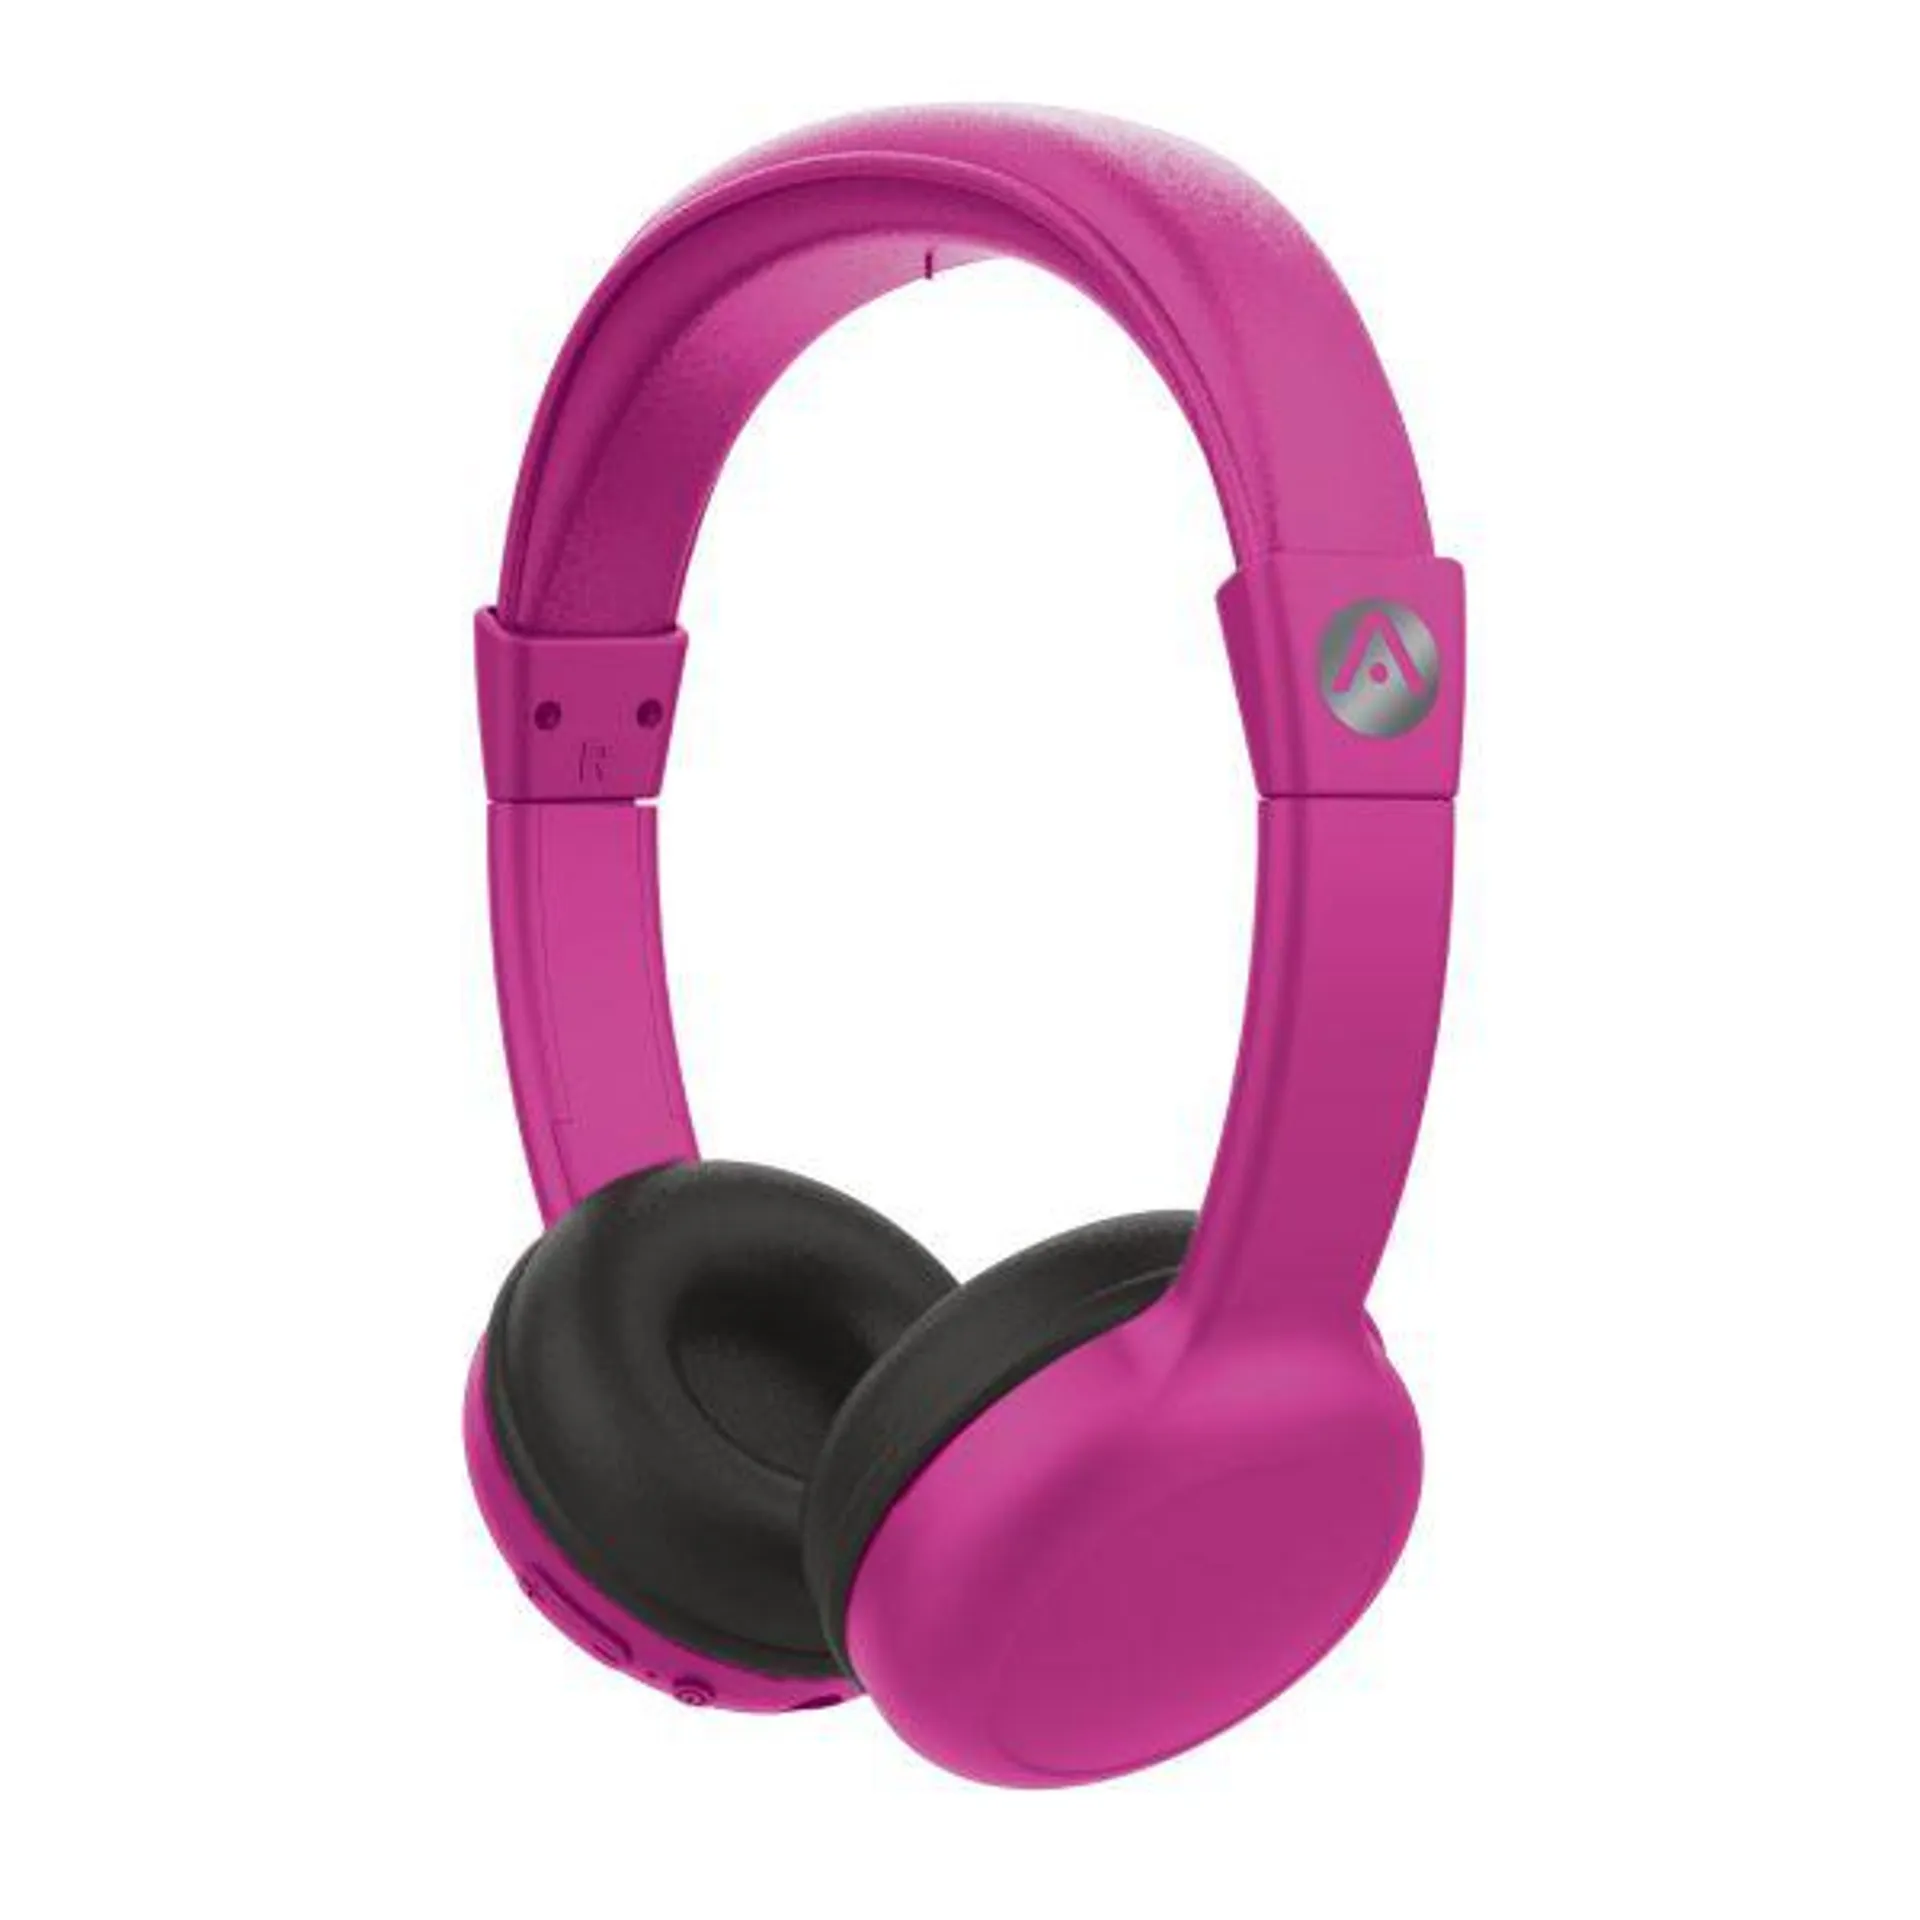 Audiomate Kids Sound Limiting Headphones - Pink